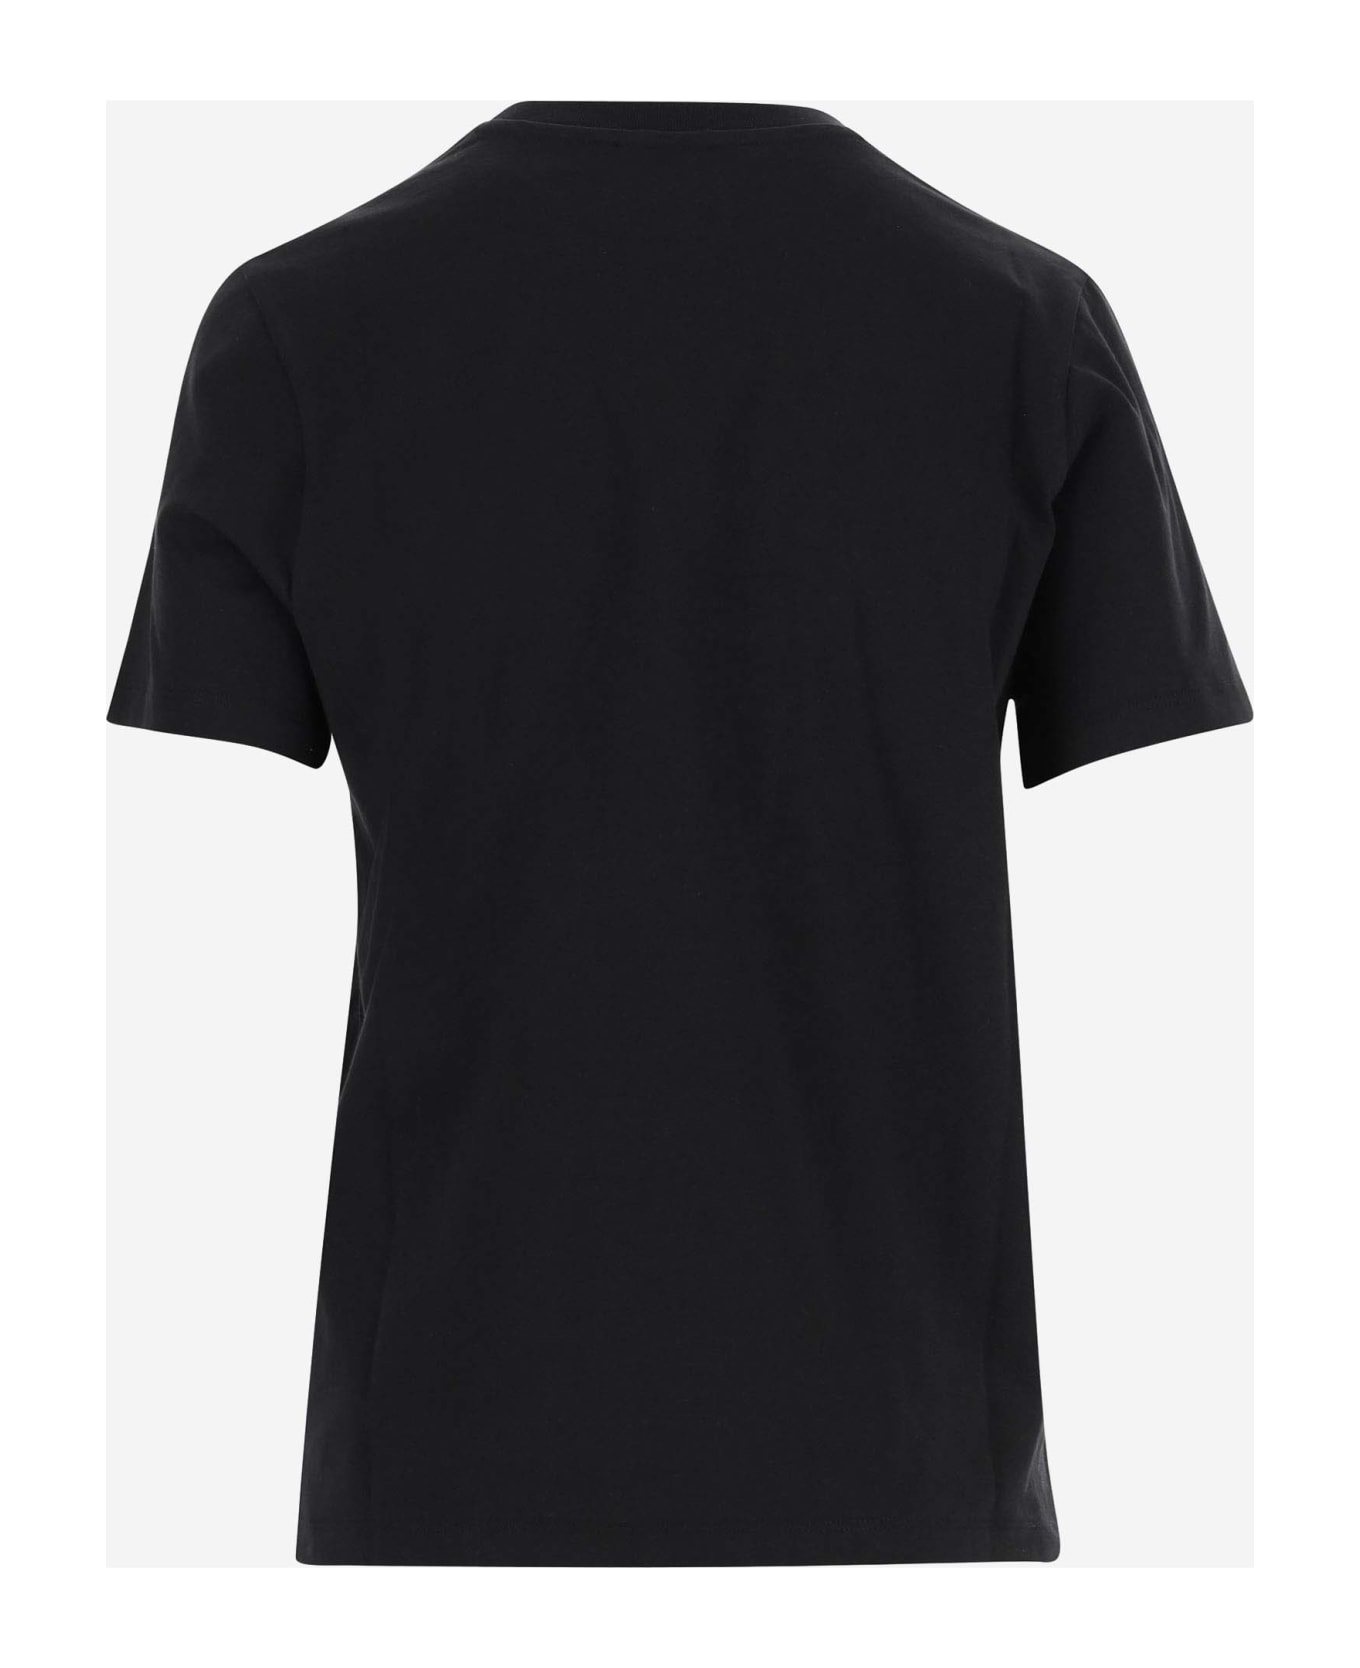 Coperni Boxy Logo Printed Crewneck T-shirt - Black